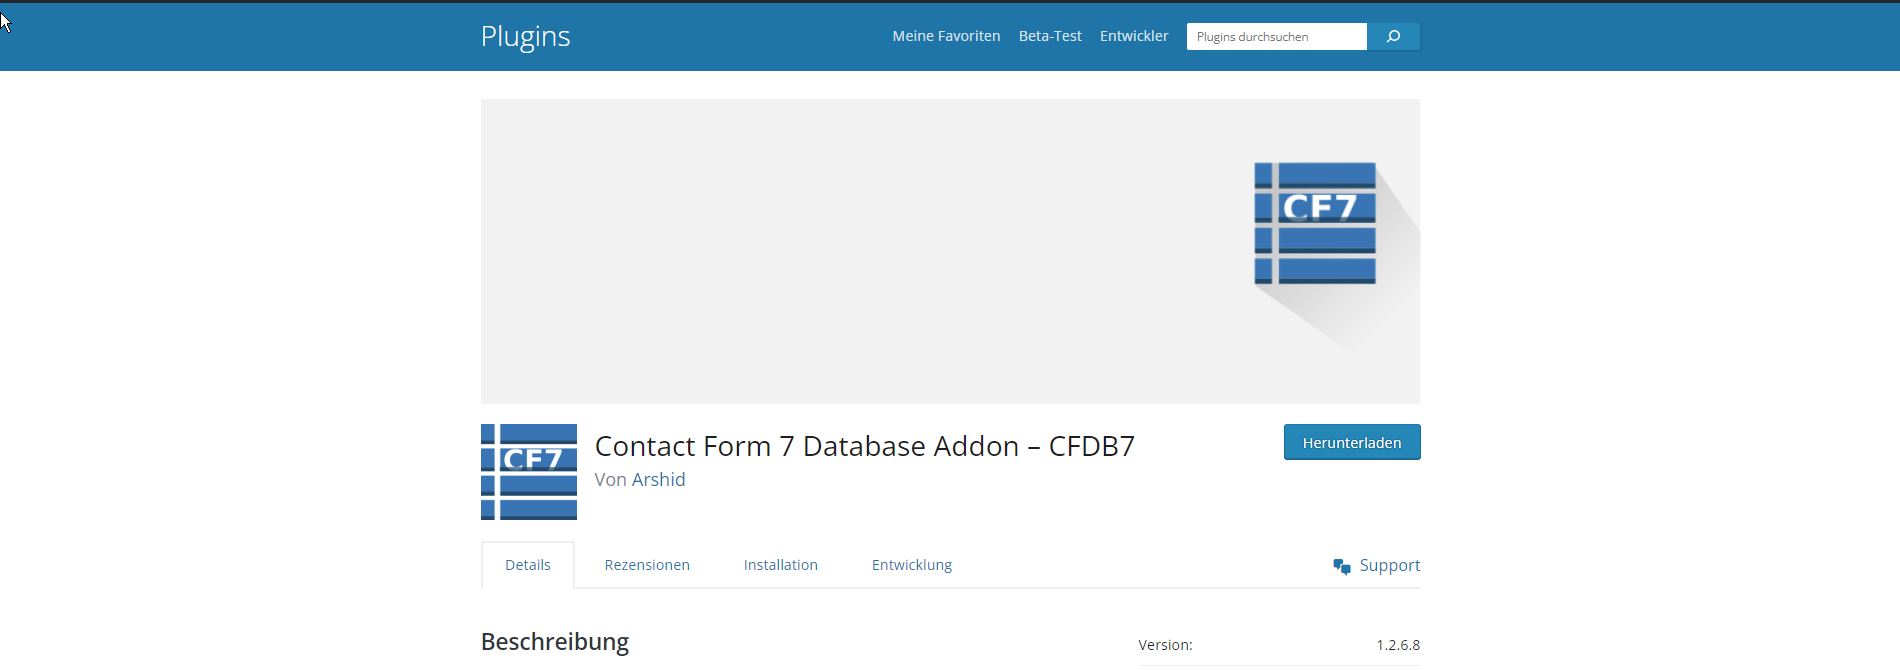 Contact Form 7 Database Addon – CFDB7 - ein Addon